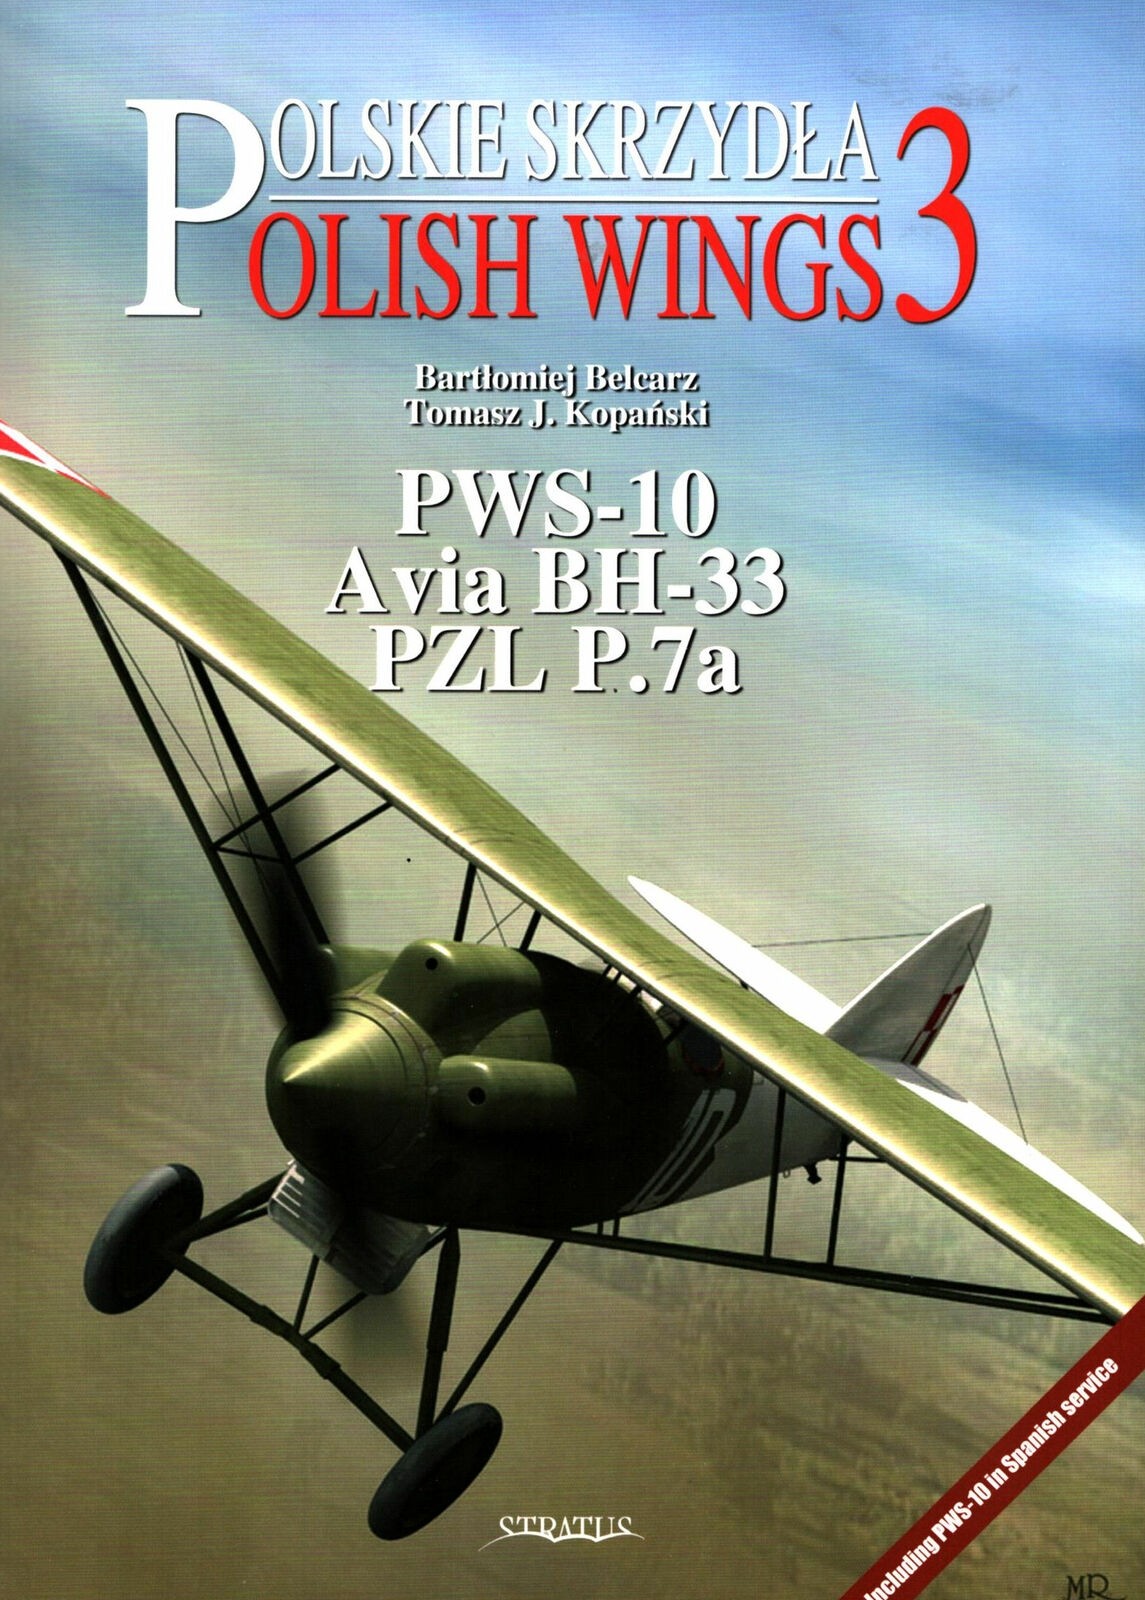 Polish Wings No.3: PWS-10, Avia BH-33, PZL P.7